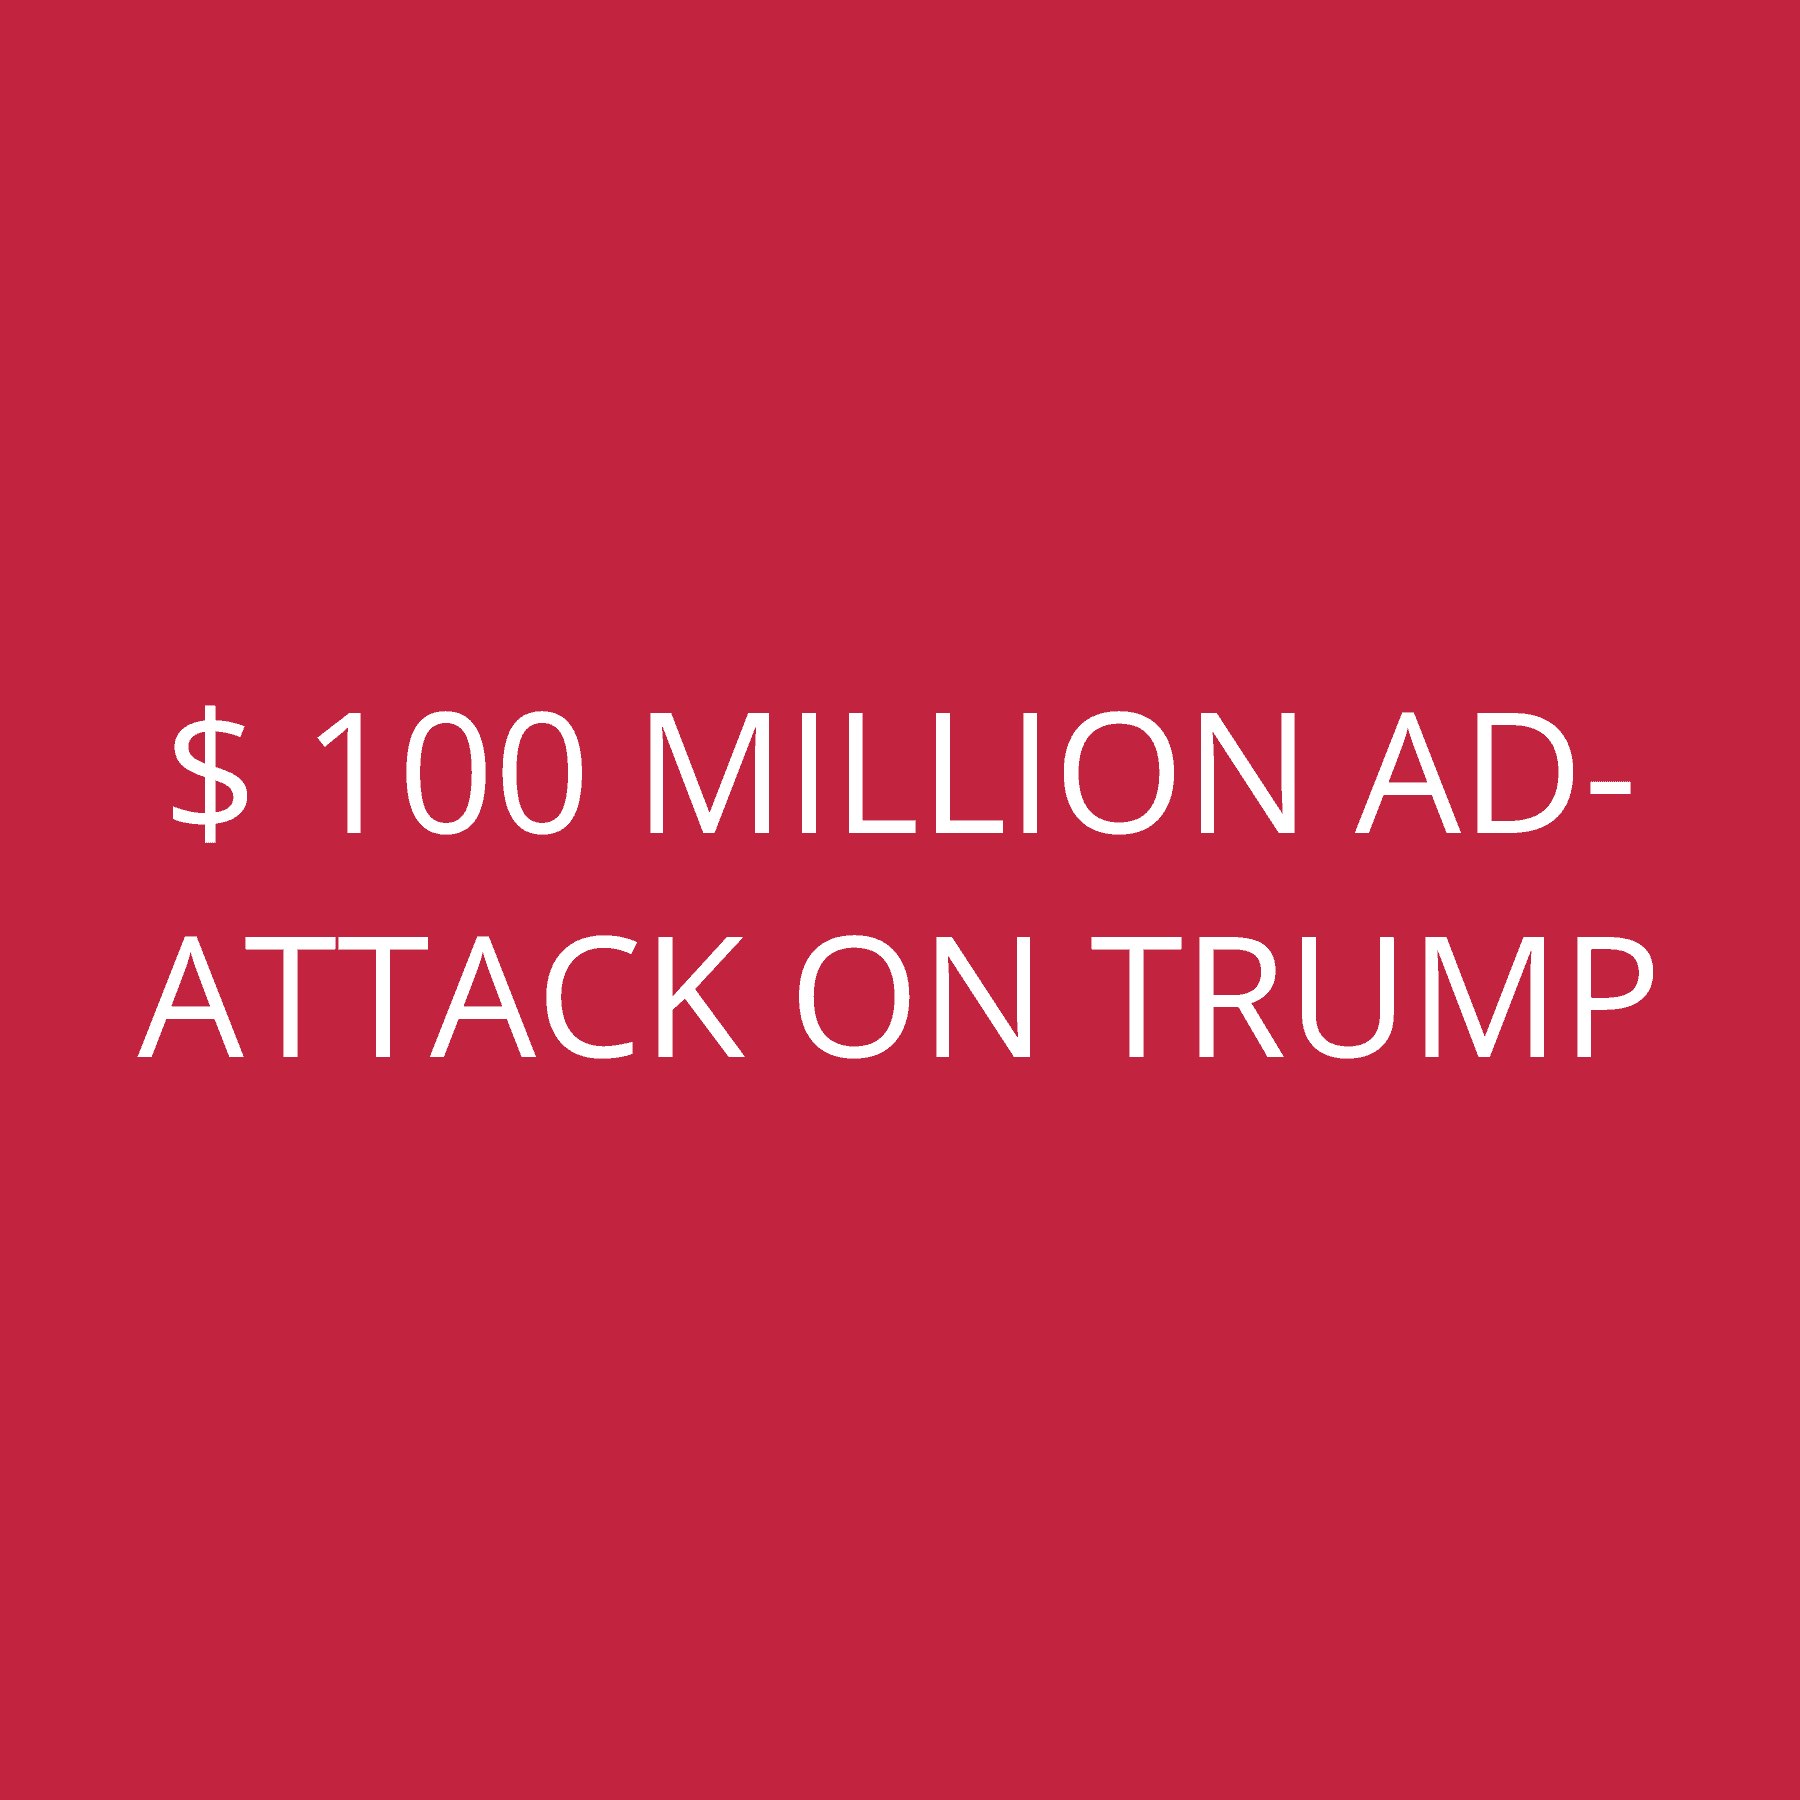 $ 100 Million ad-attack on Trump